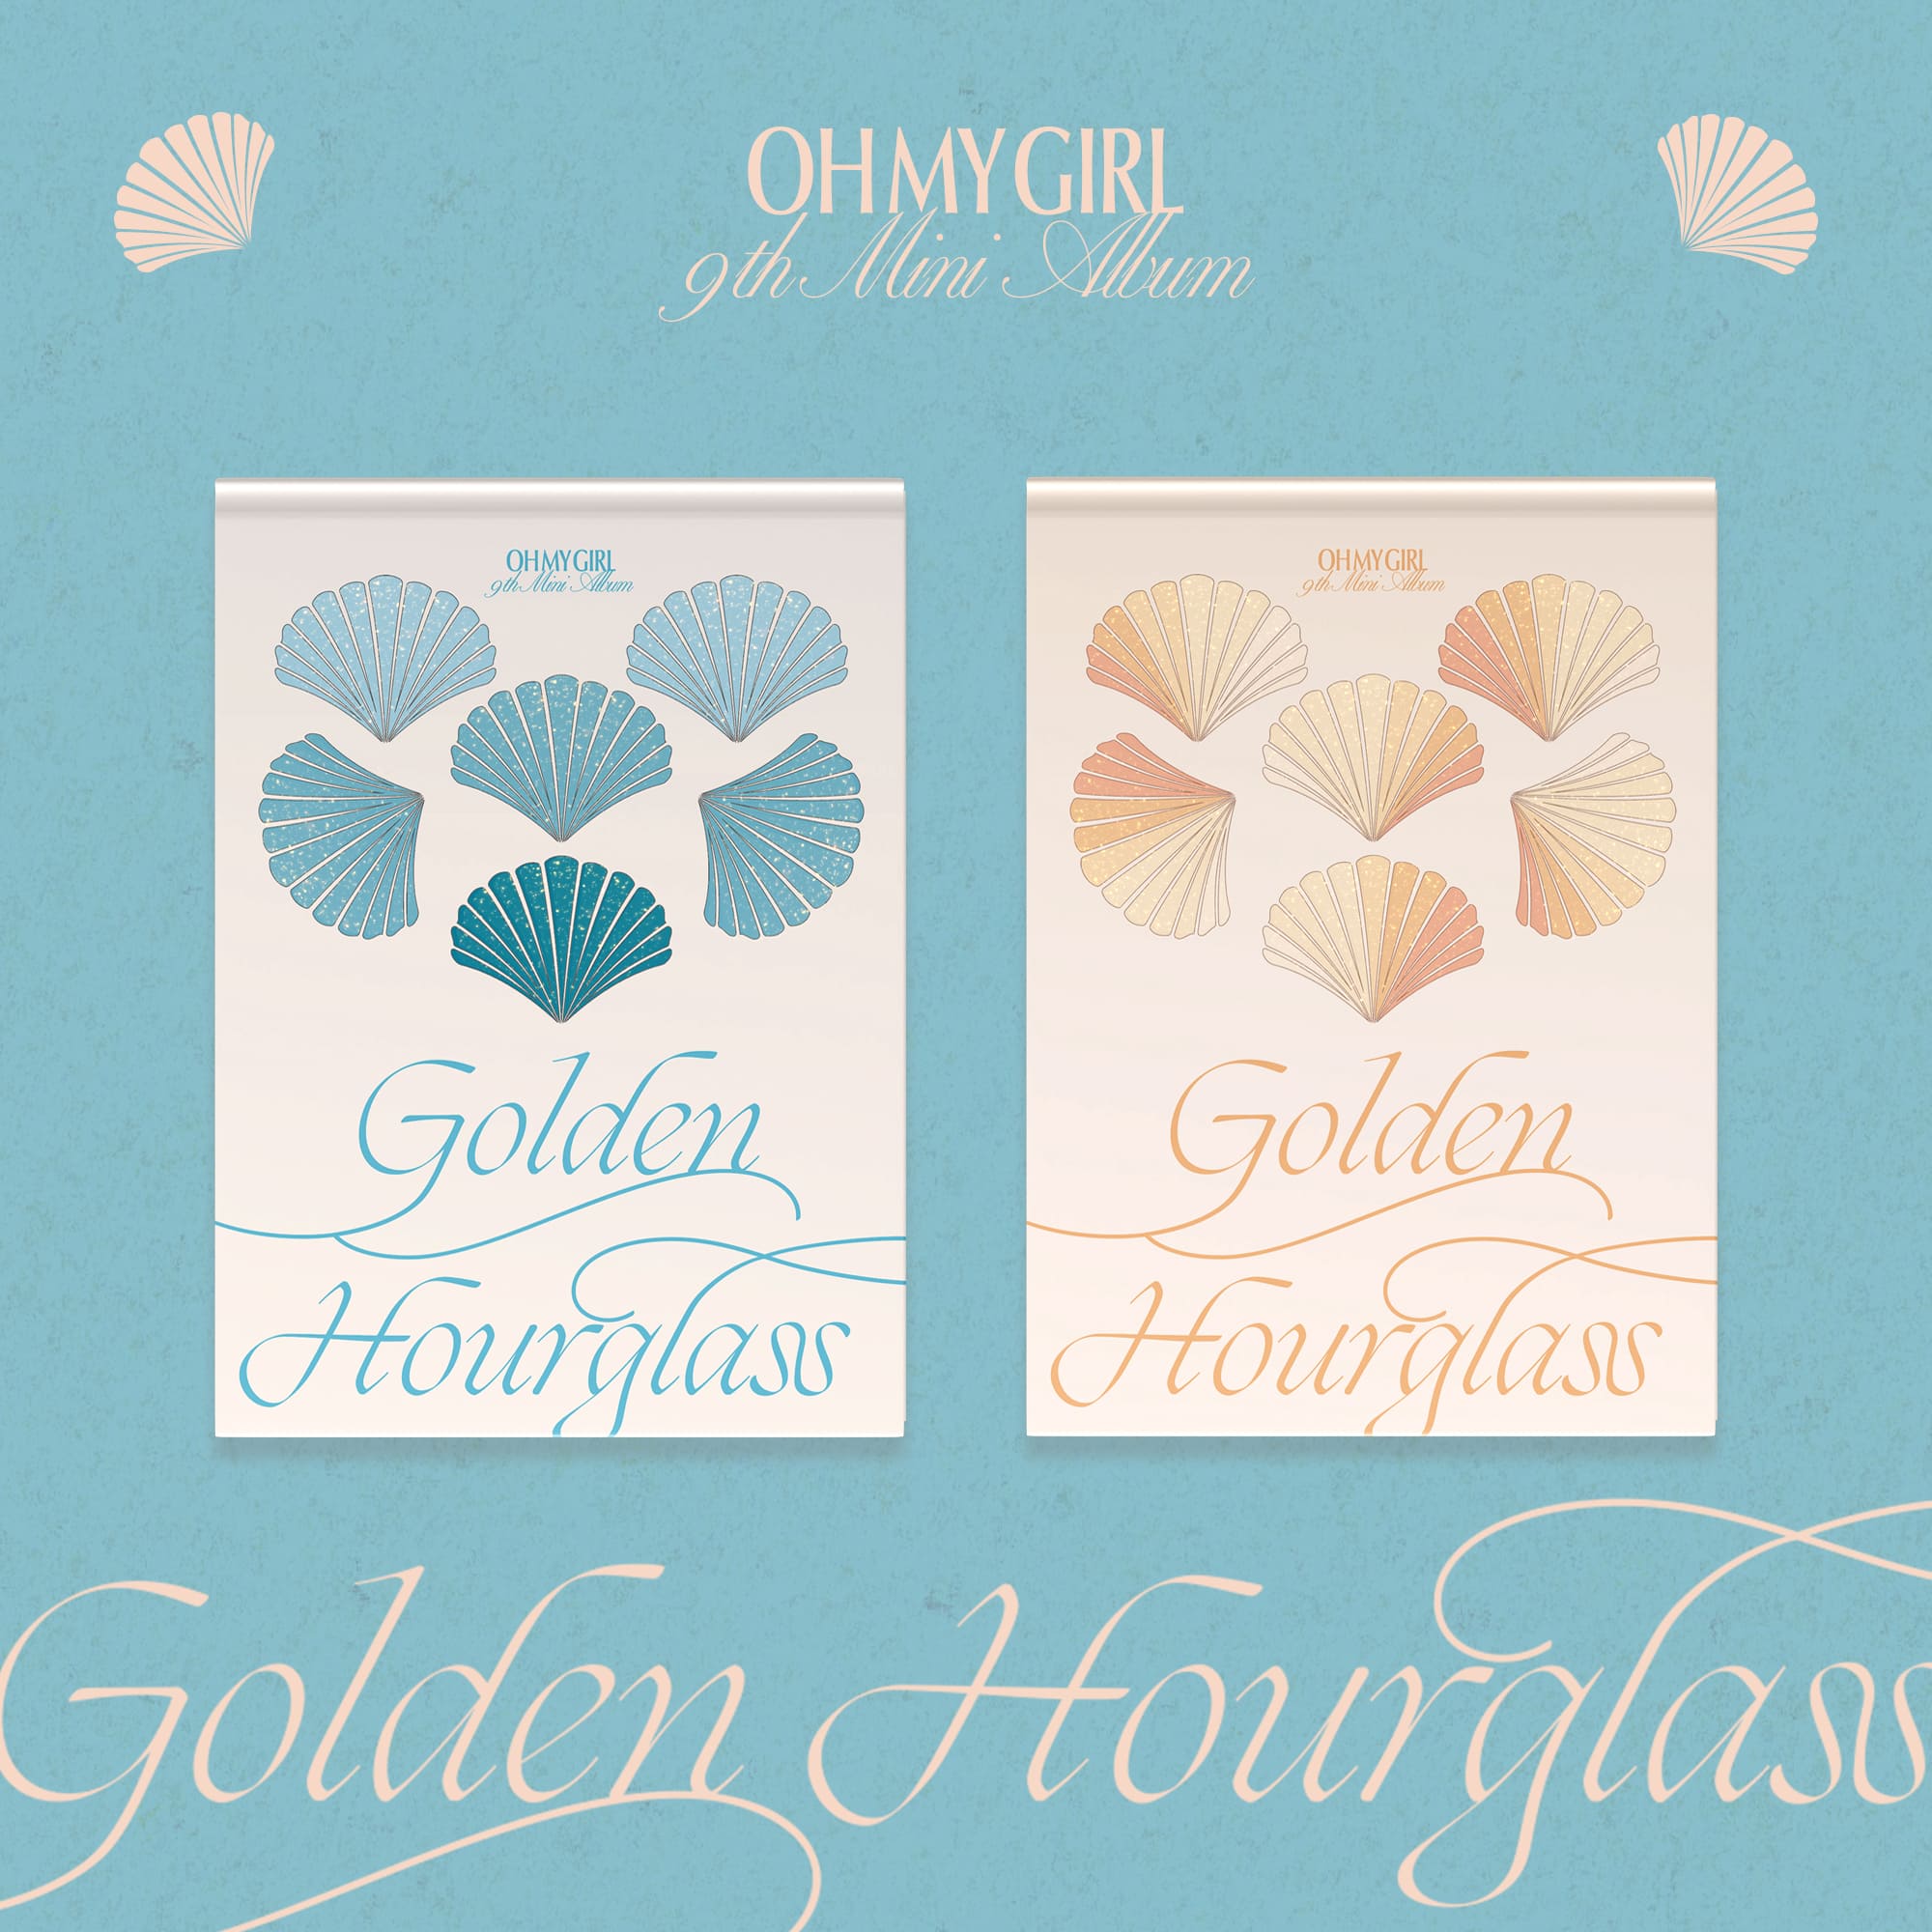 OH MY GIRL [Golden Hourglass] 9th Mini Album